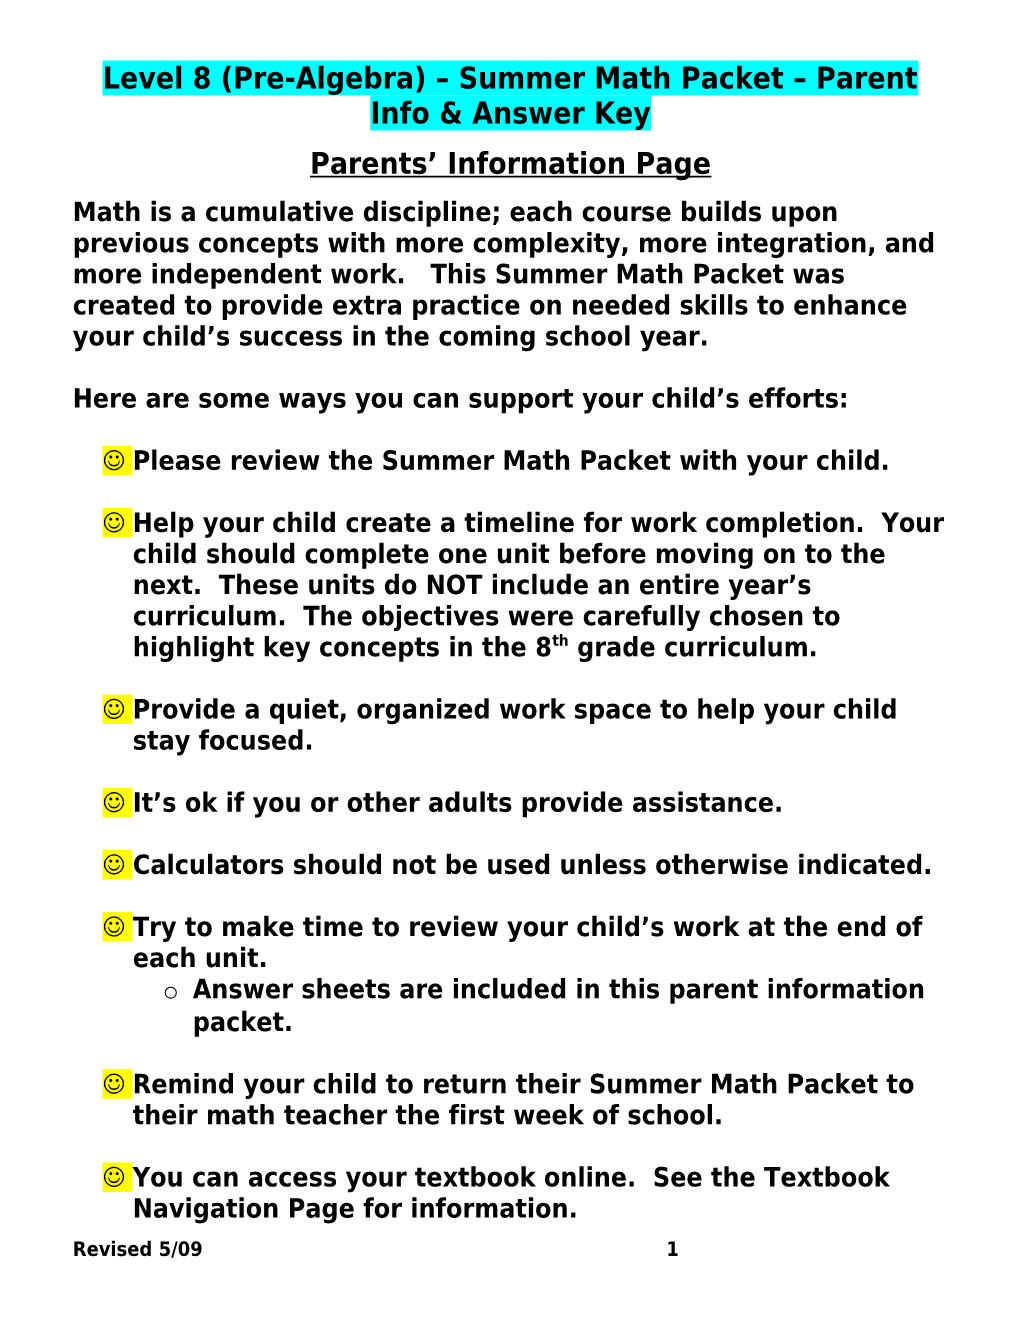 Level 8 (Pre-Algebra) Summer Math Packet Parent Info & Answer Key